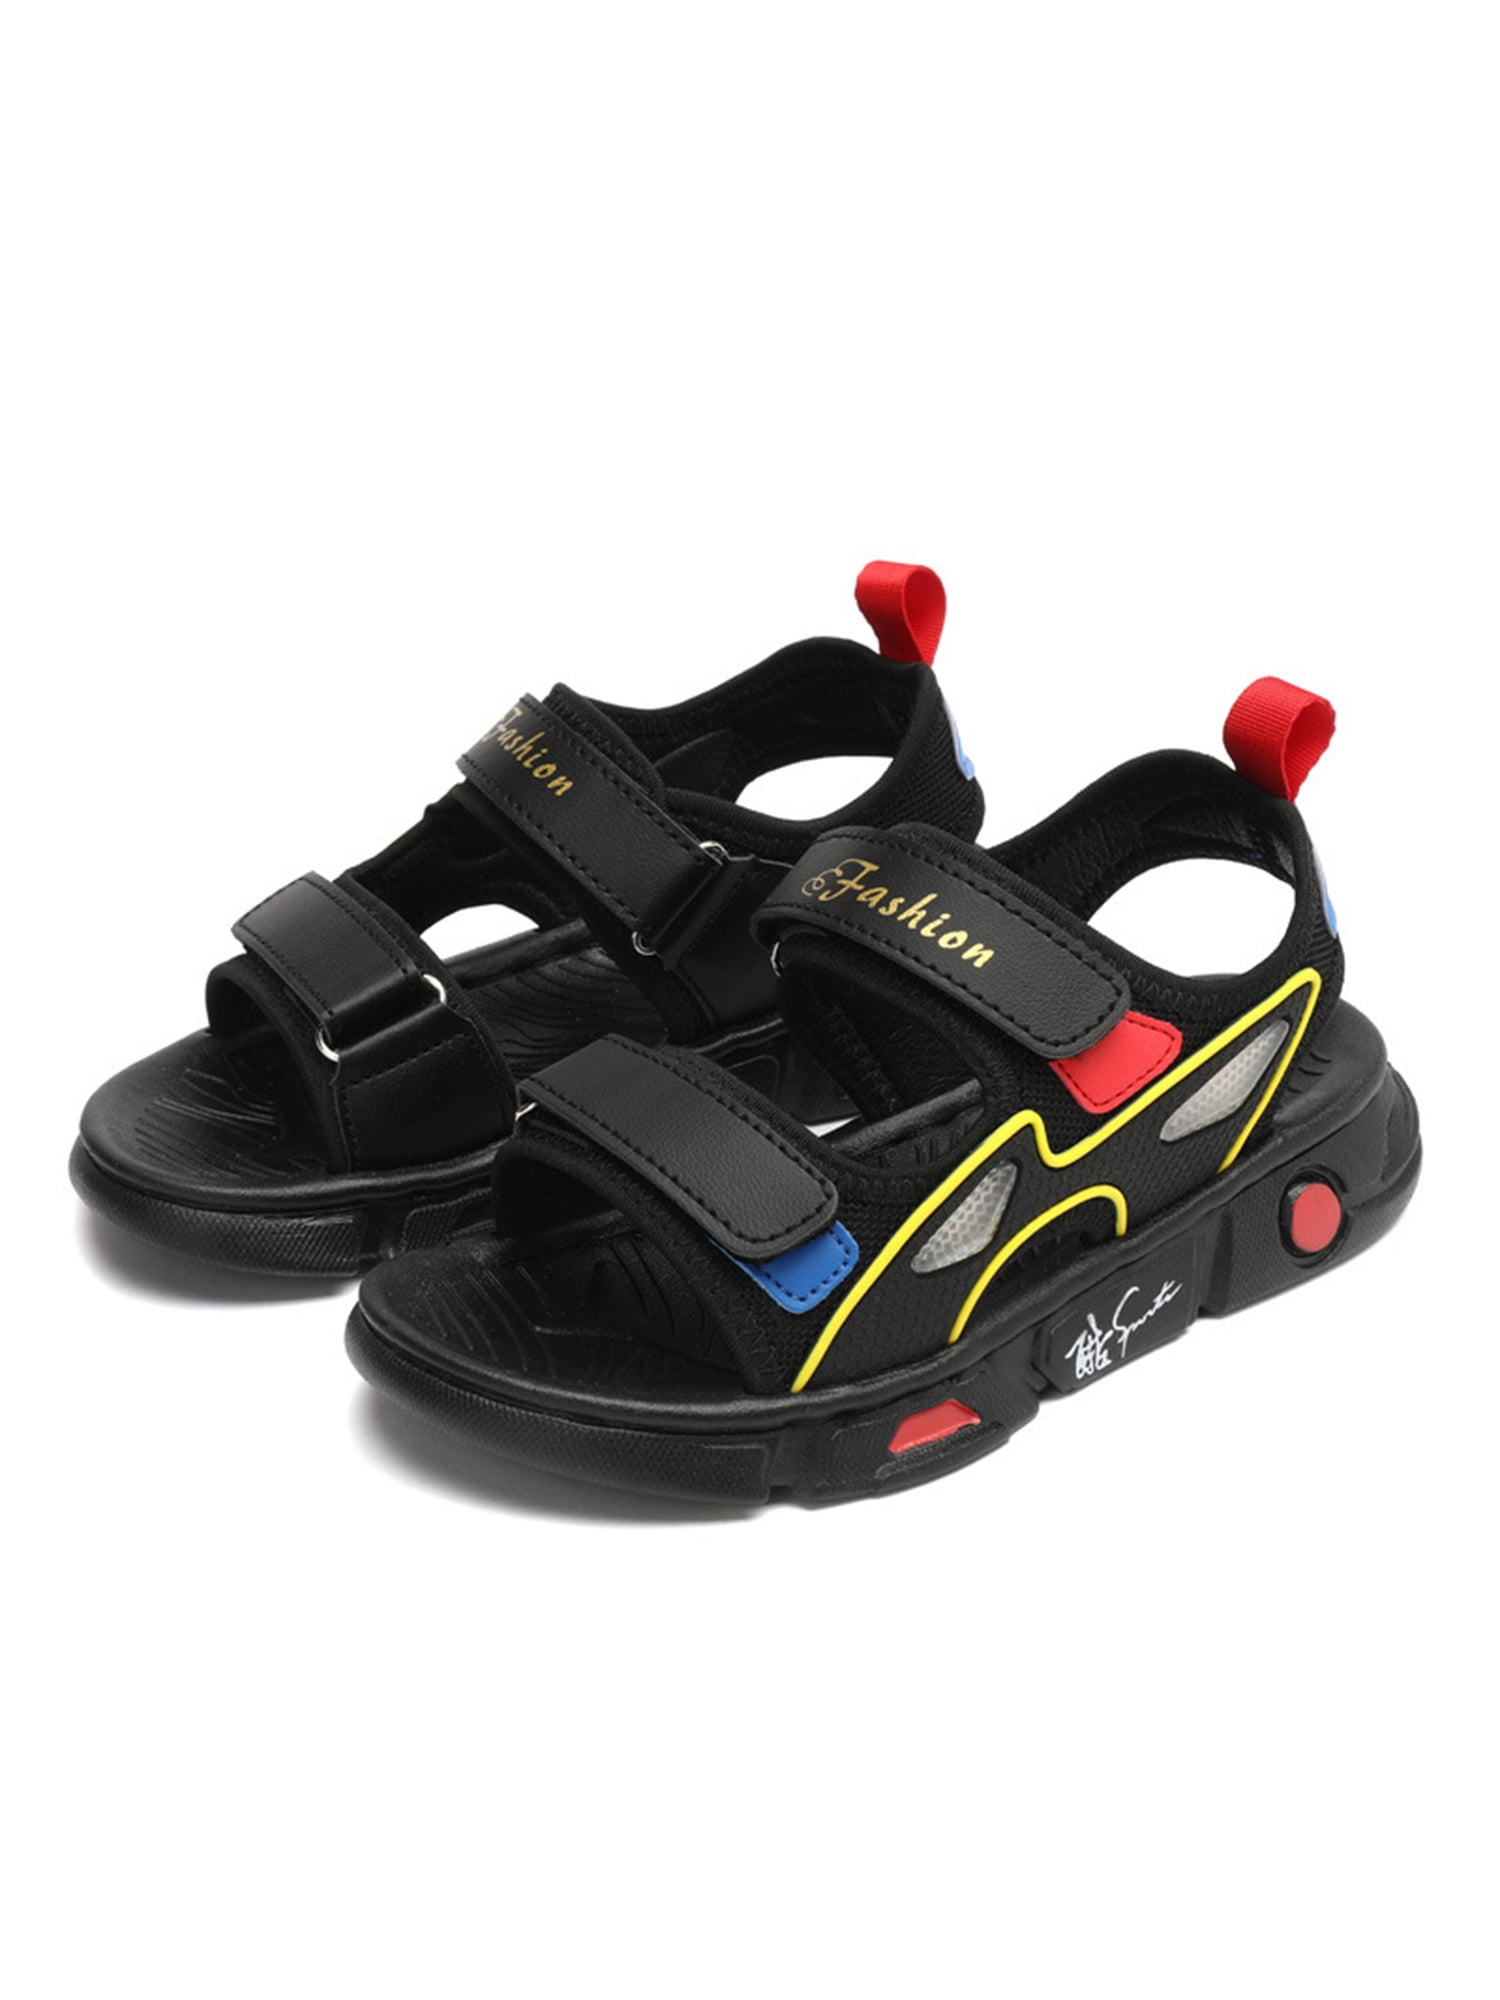 Kids Boys Casual Beach Slippers Sport Sandals Lightweight Anti-slip Summer Shoes 